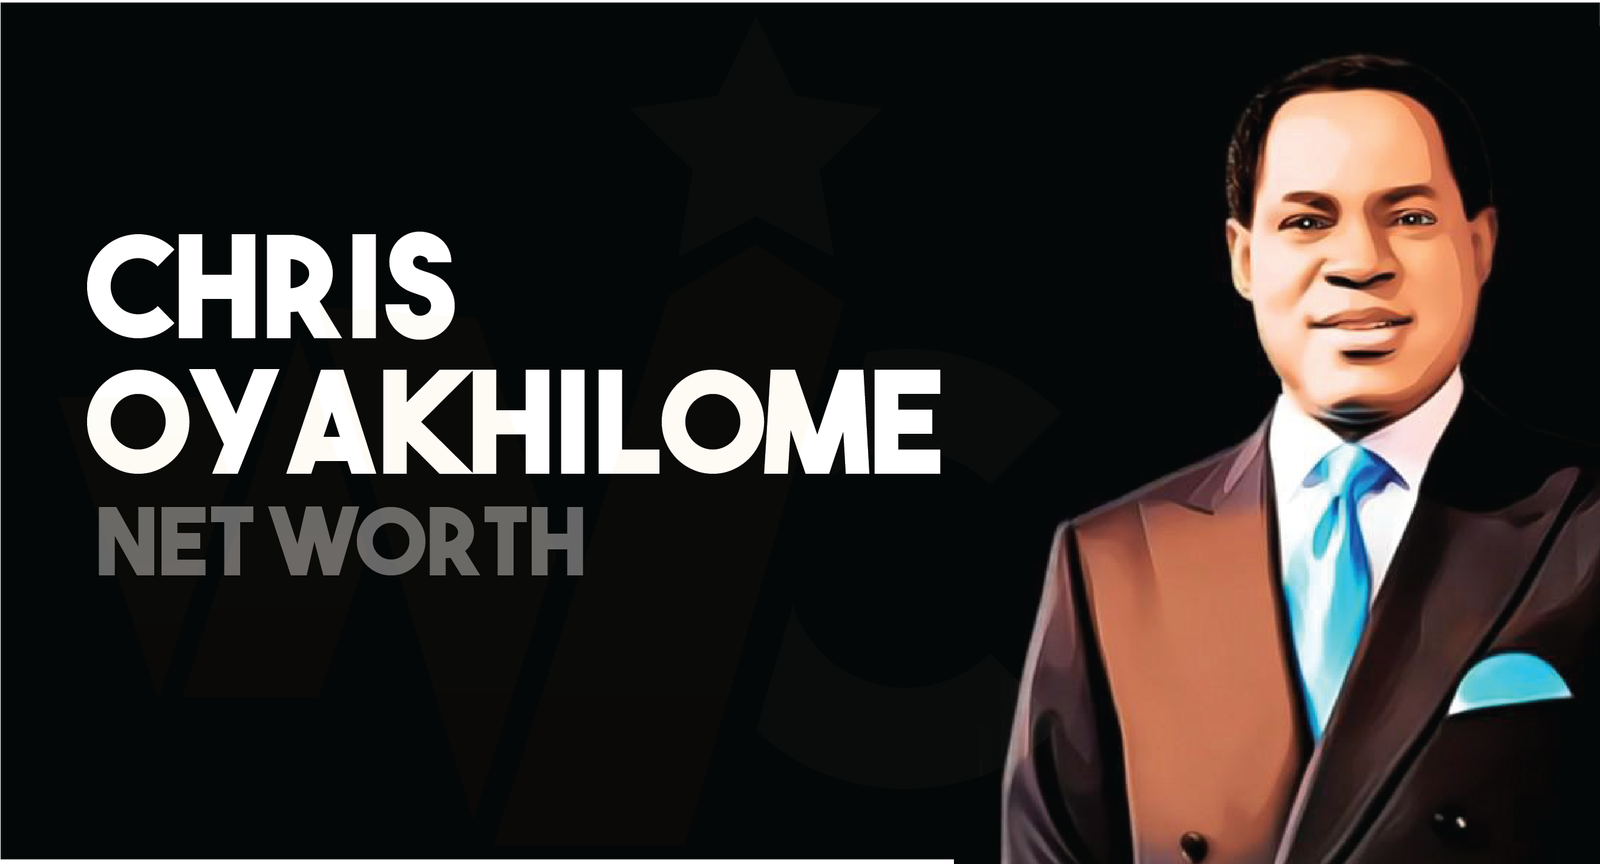 Chris Oyakhilome - Net worth